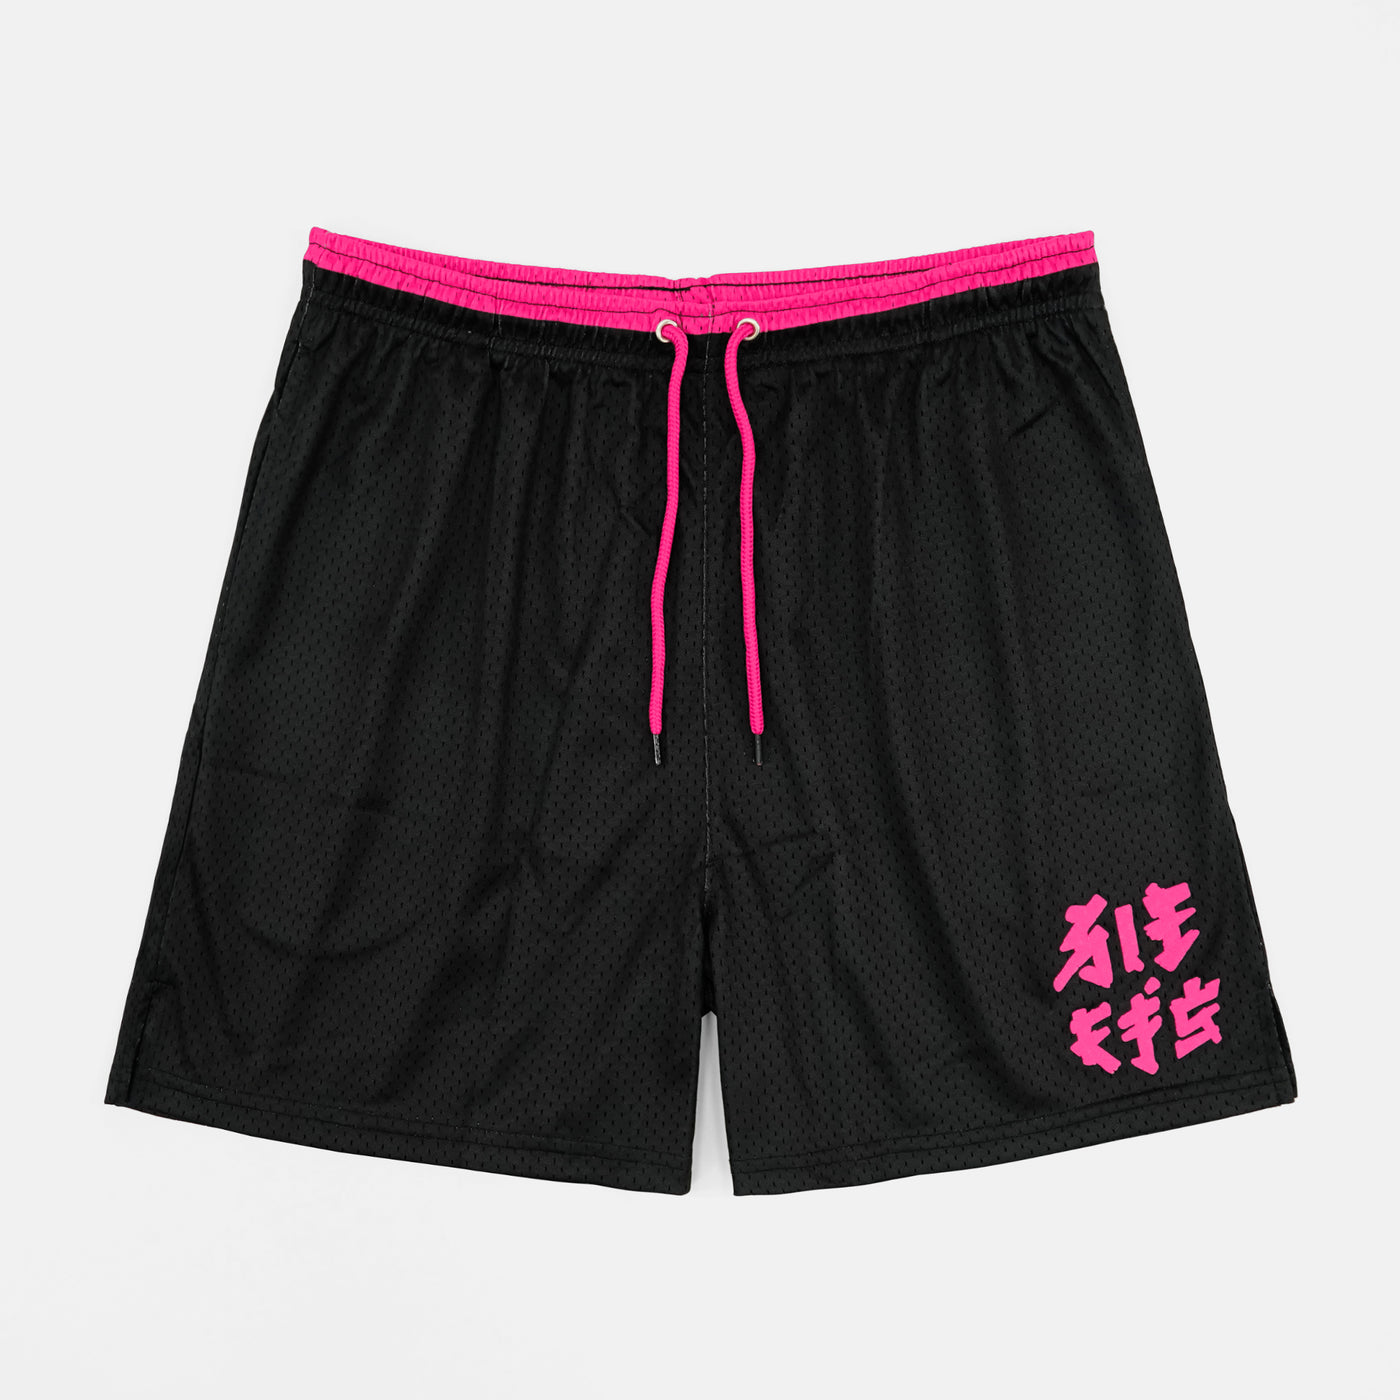 Pitch Black Finest Pink Shorts - 7"